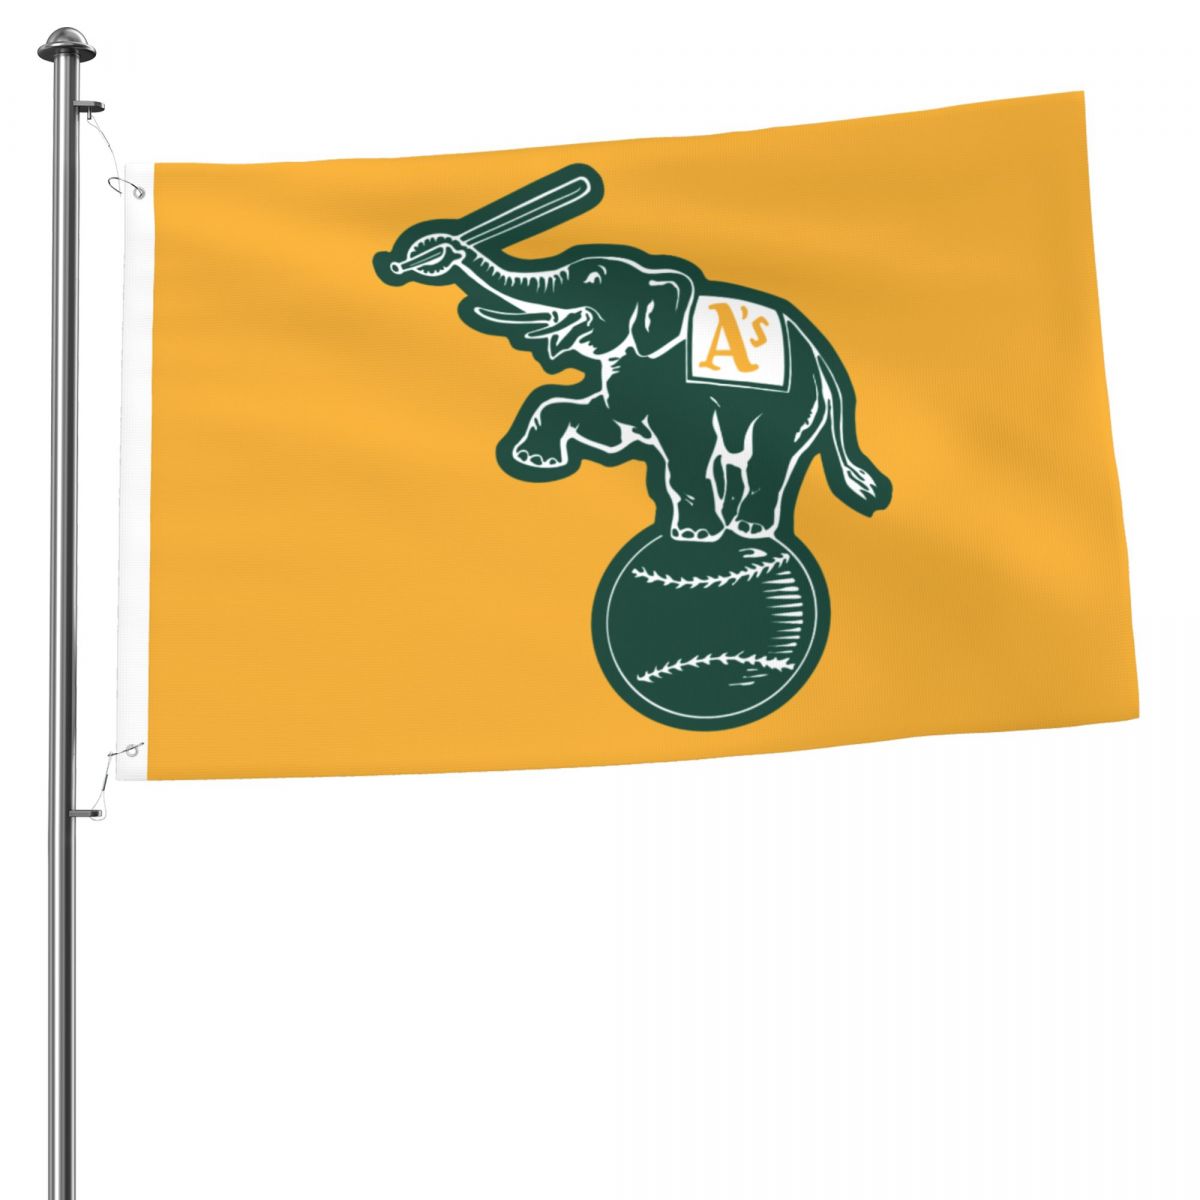 Oakland Athletics Yellow 2x3 FT UV Resistant Flag